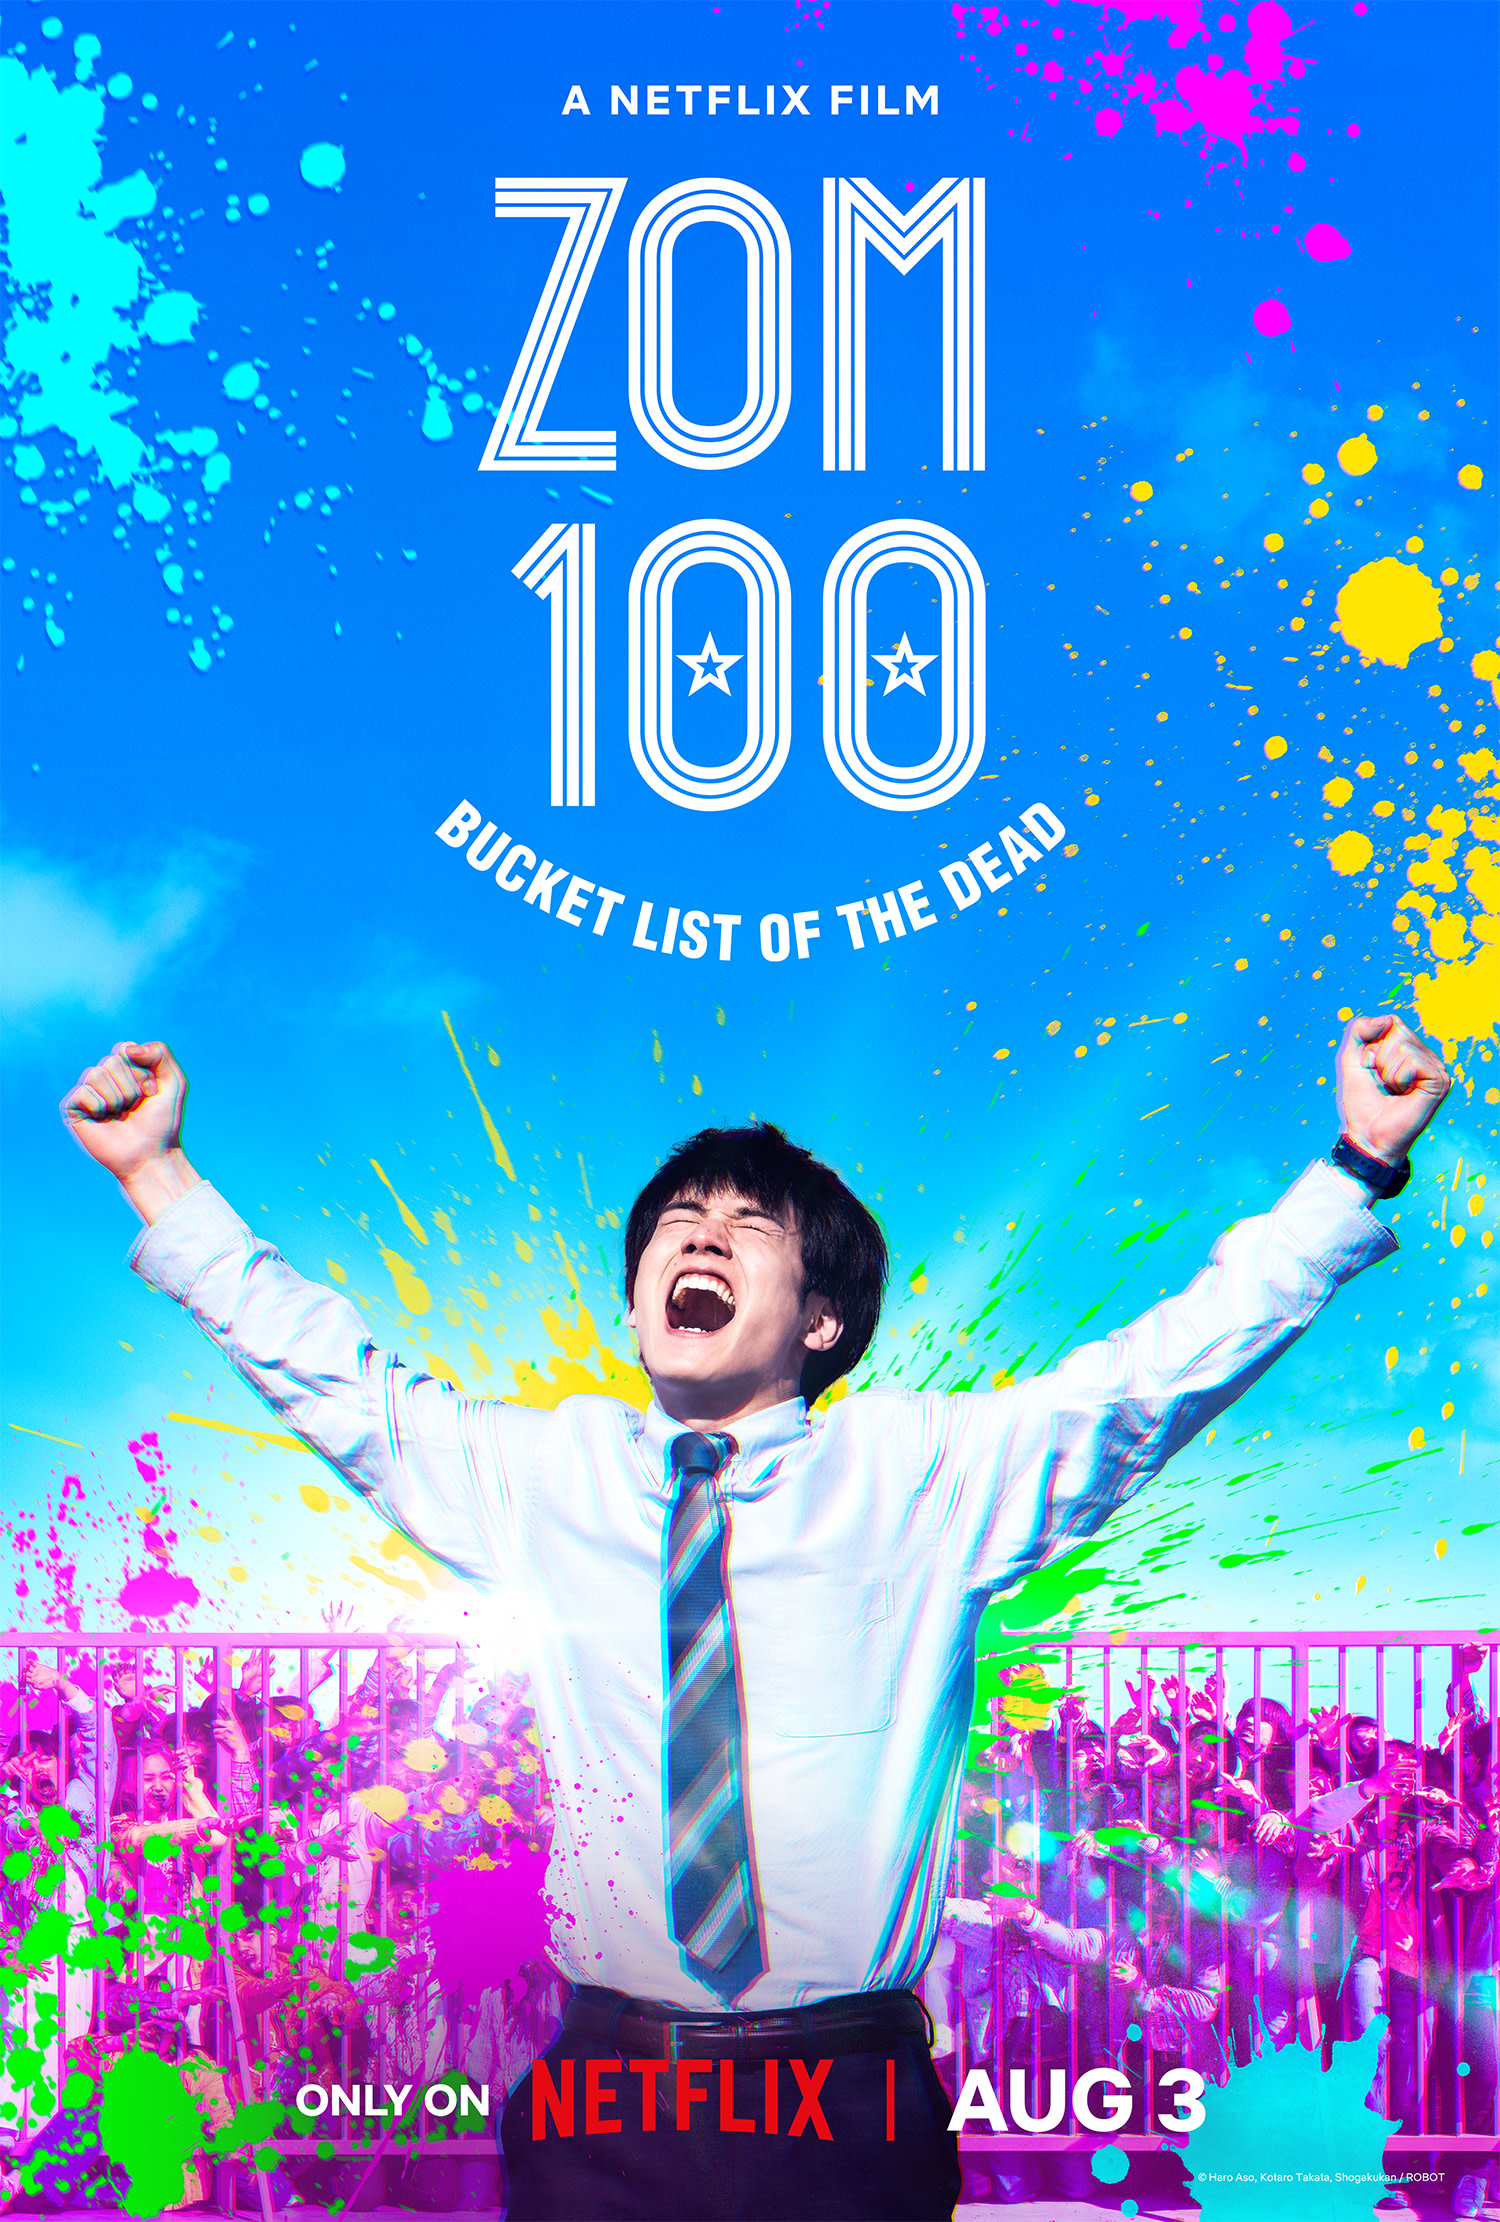 ENUS Zom100 Teaser Vertical RGB PRE